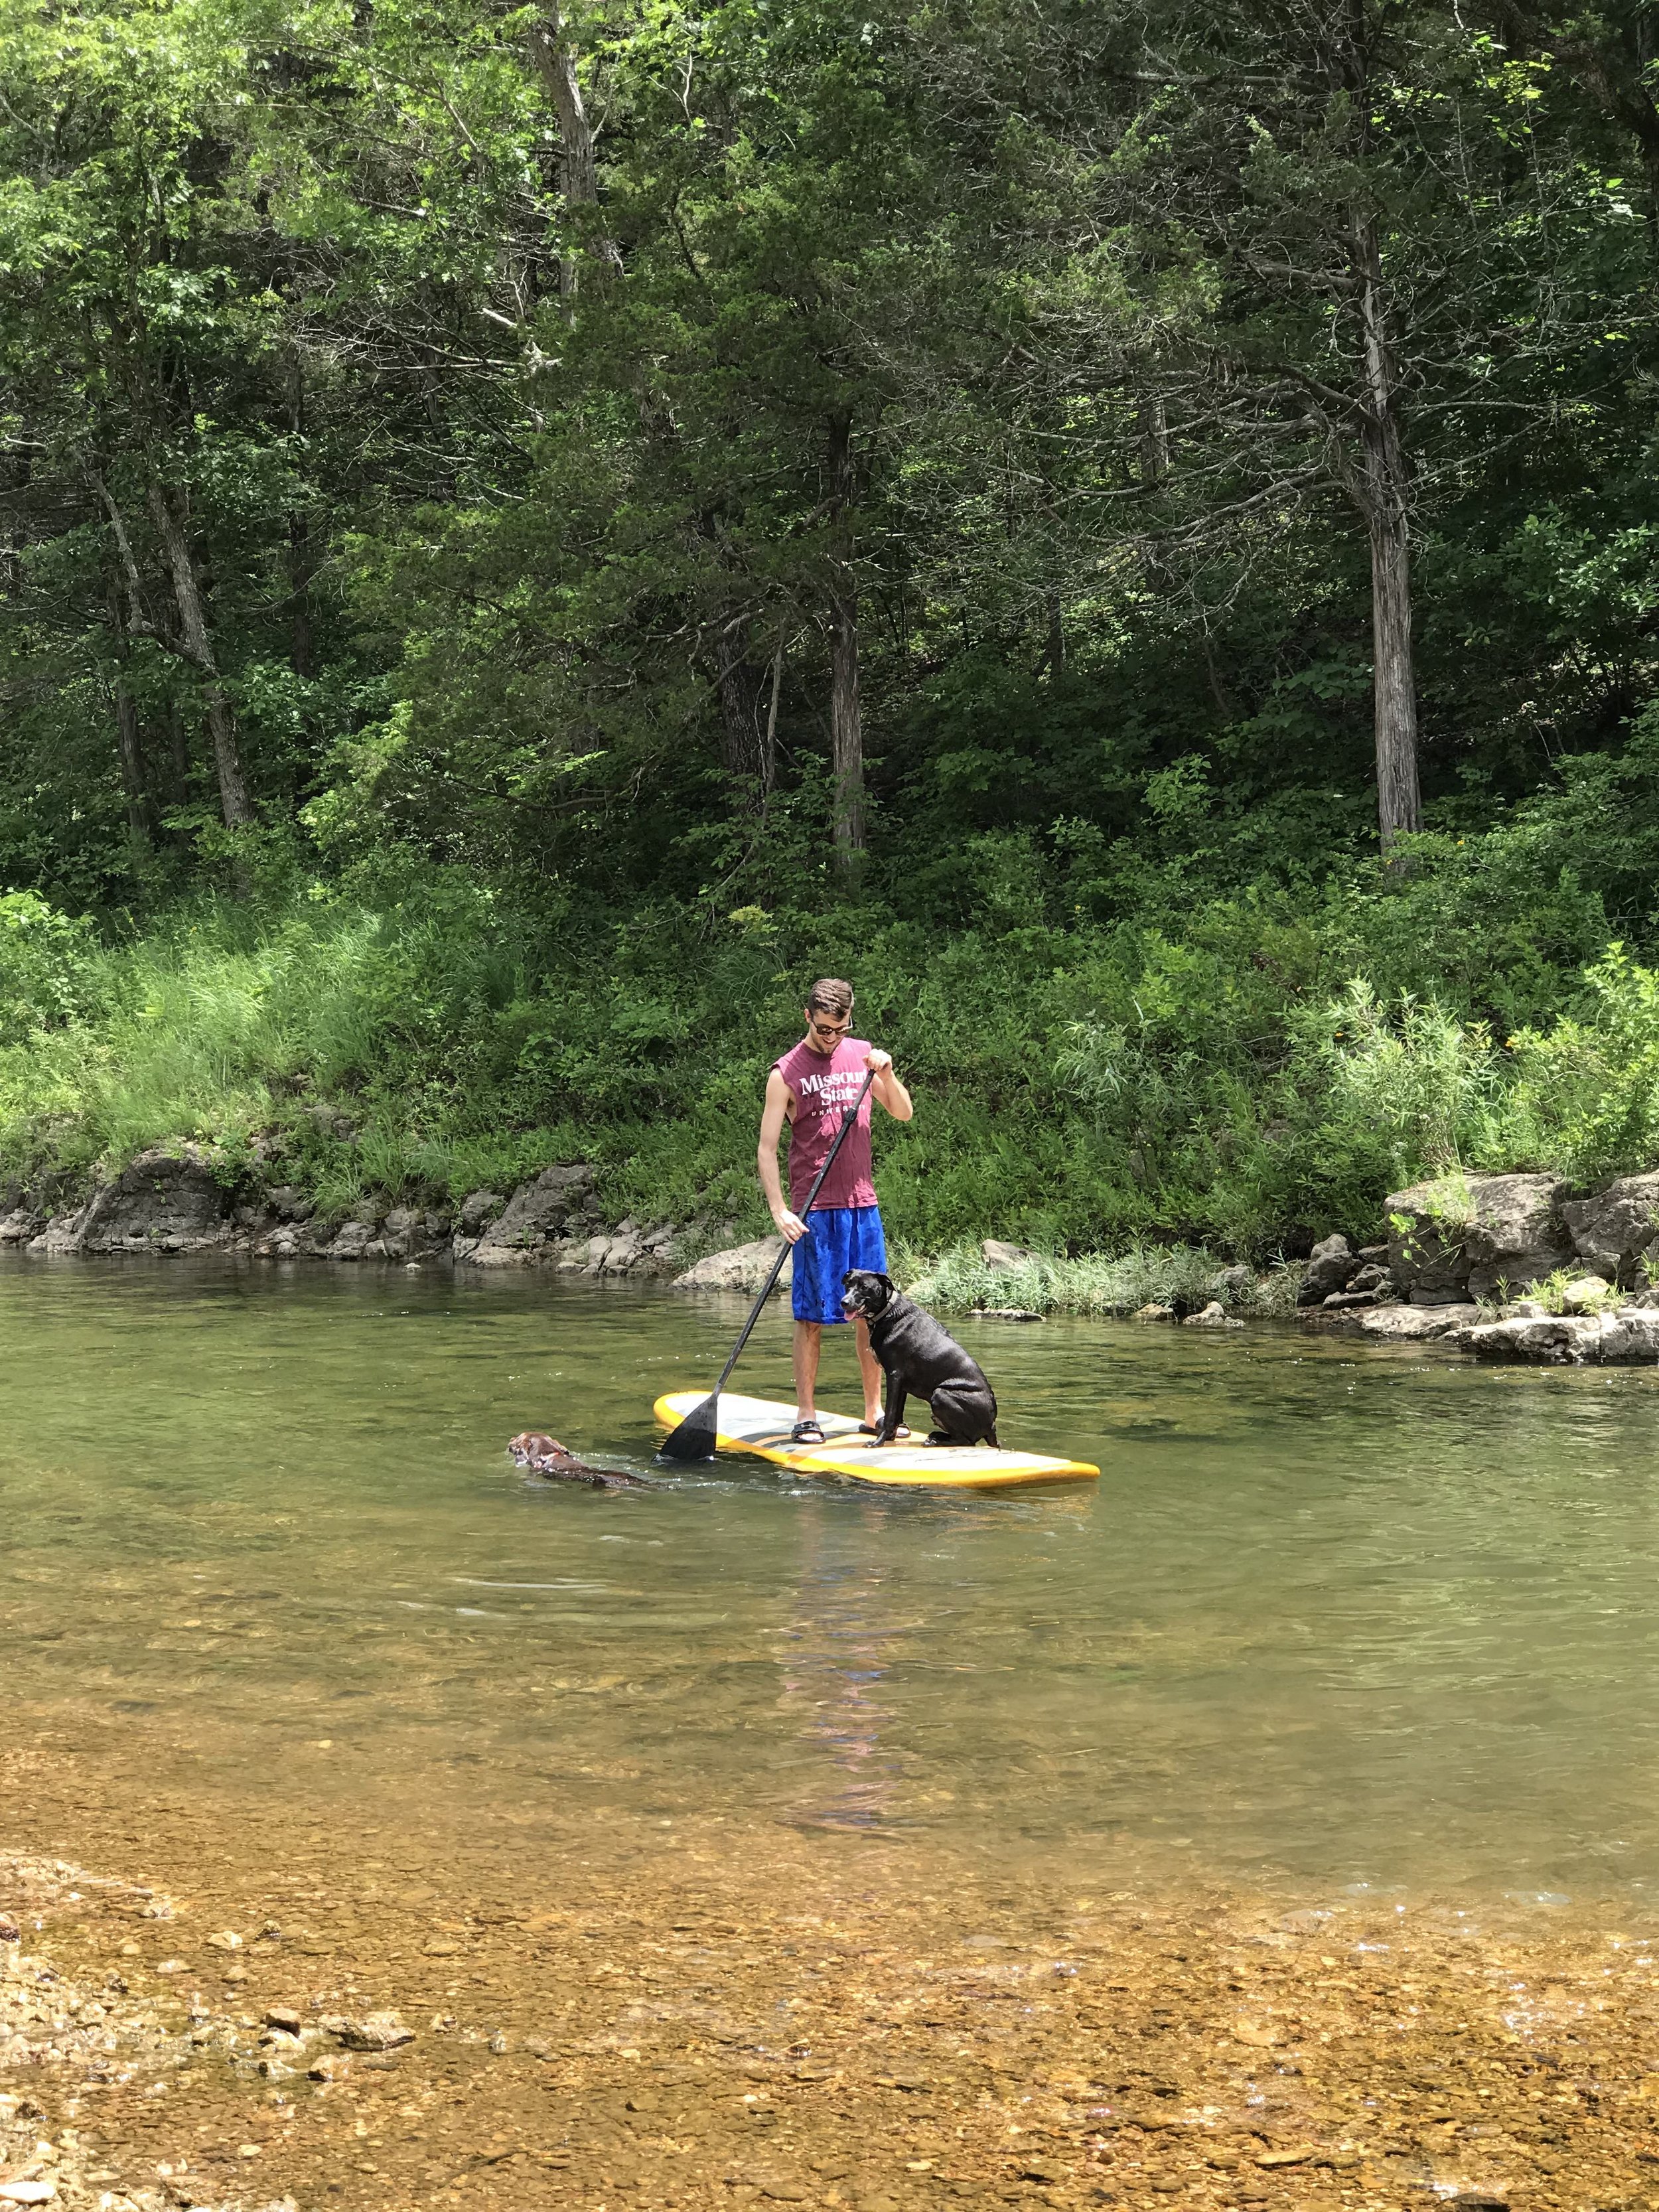  Paddle boarding on the Huzzah Creek 